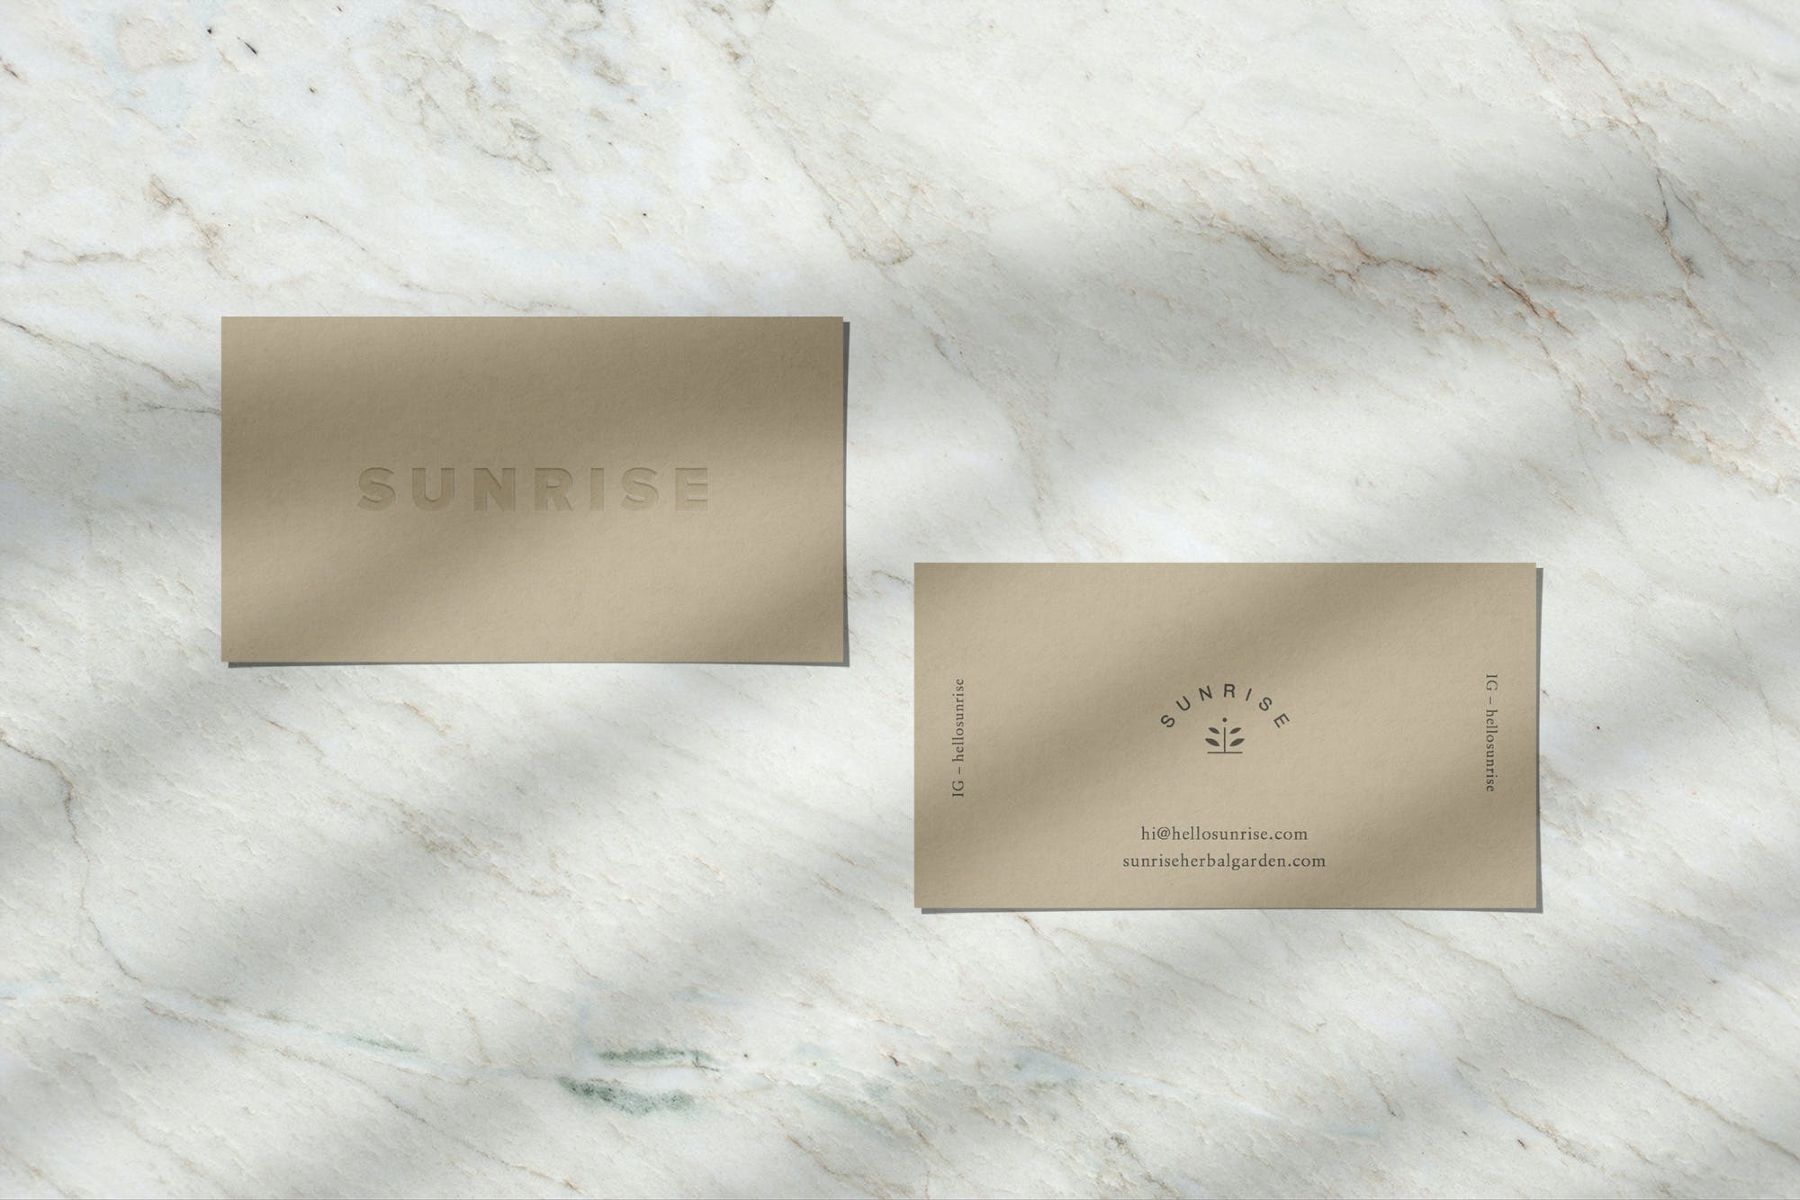 日出凸版名片样机 SUNRISE Letterpress Business Cards Mockup插图4